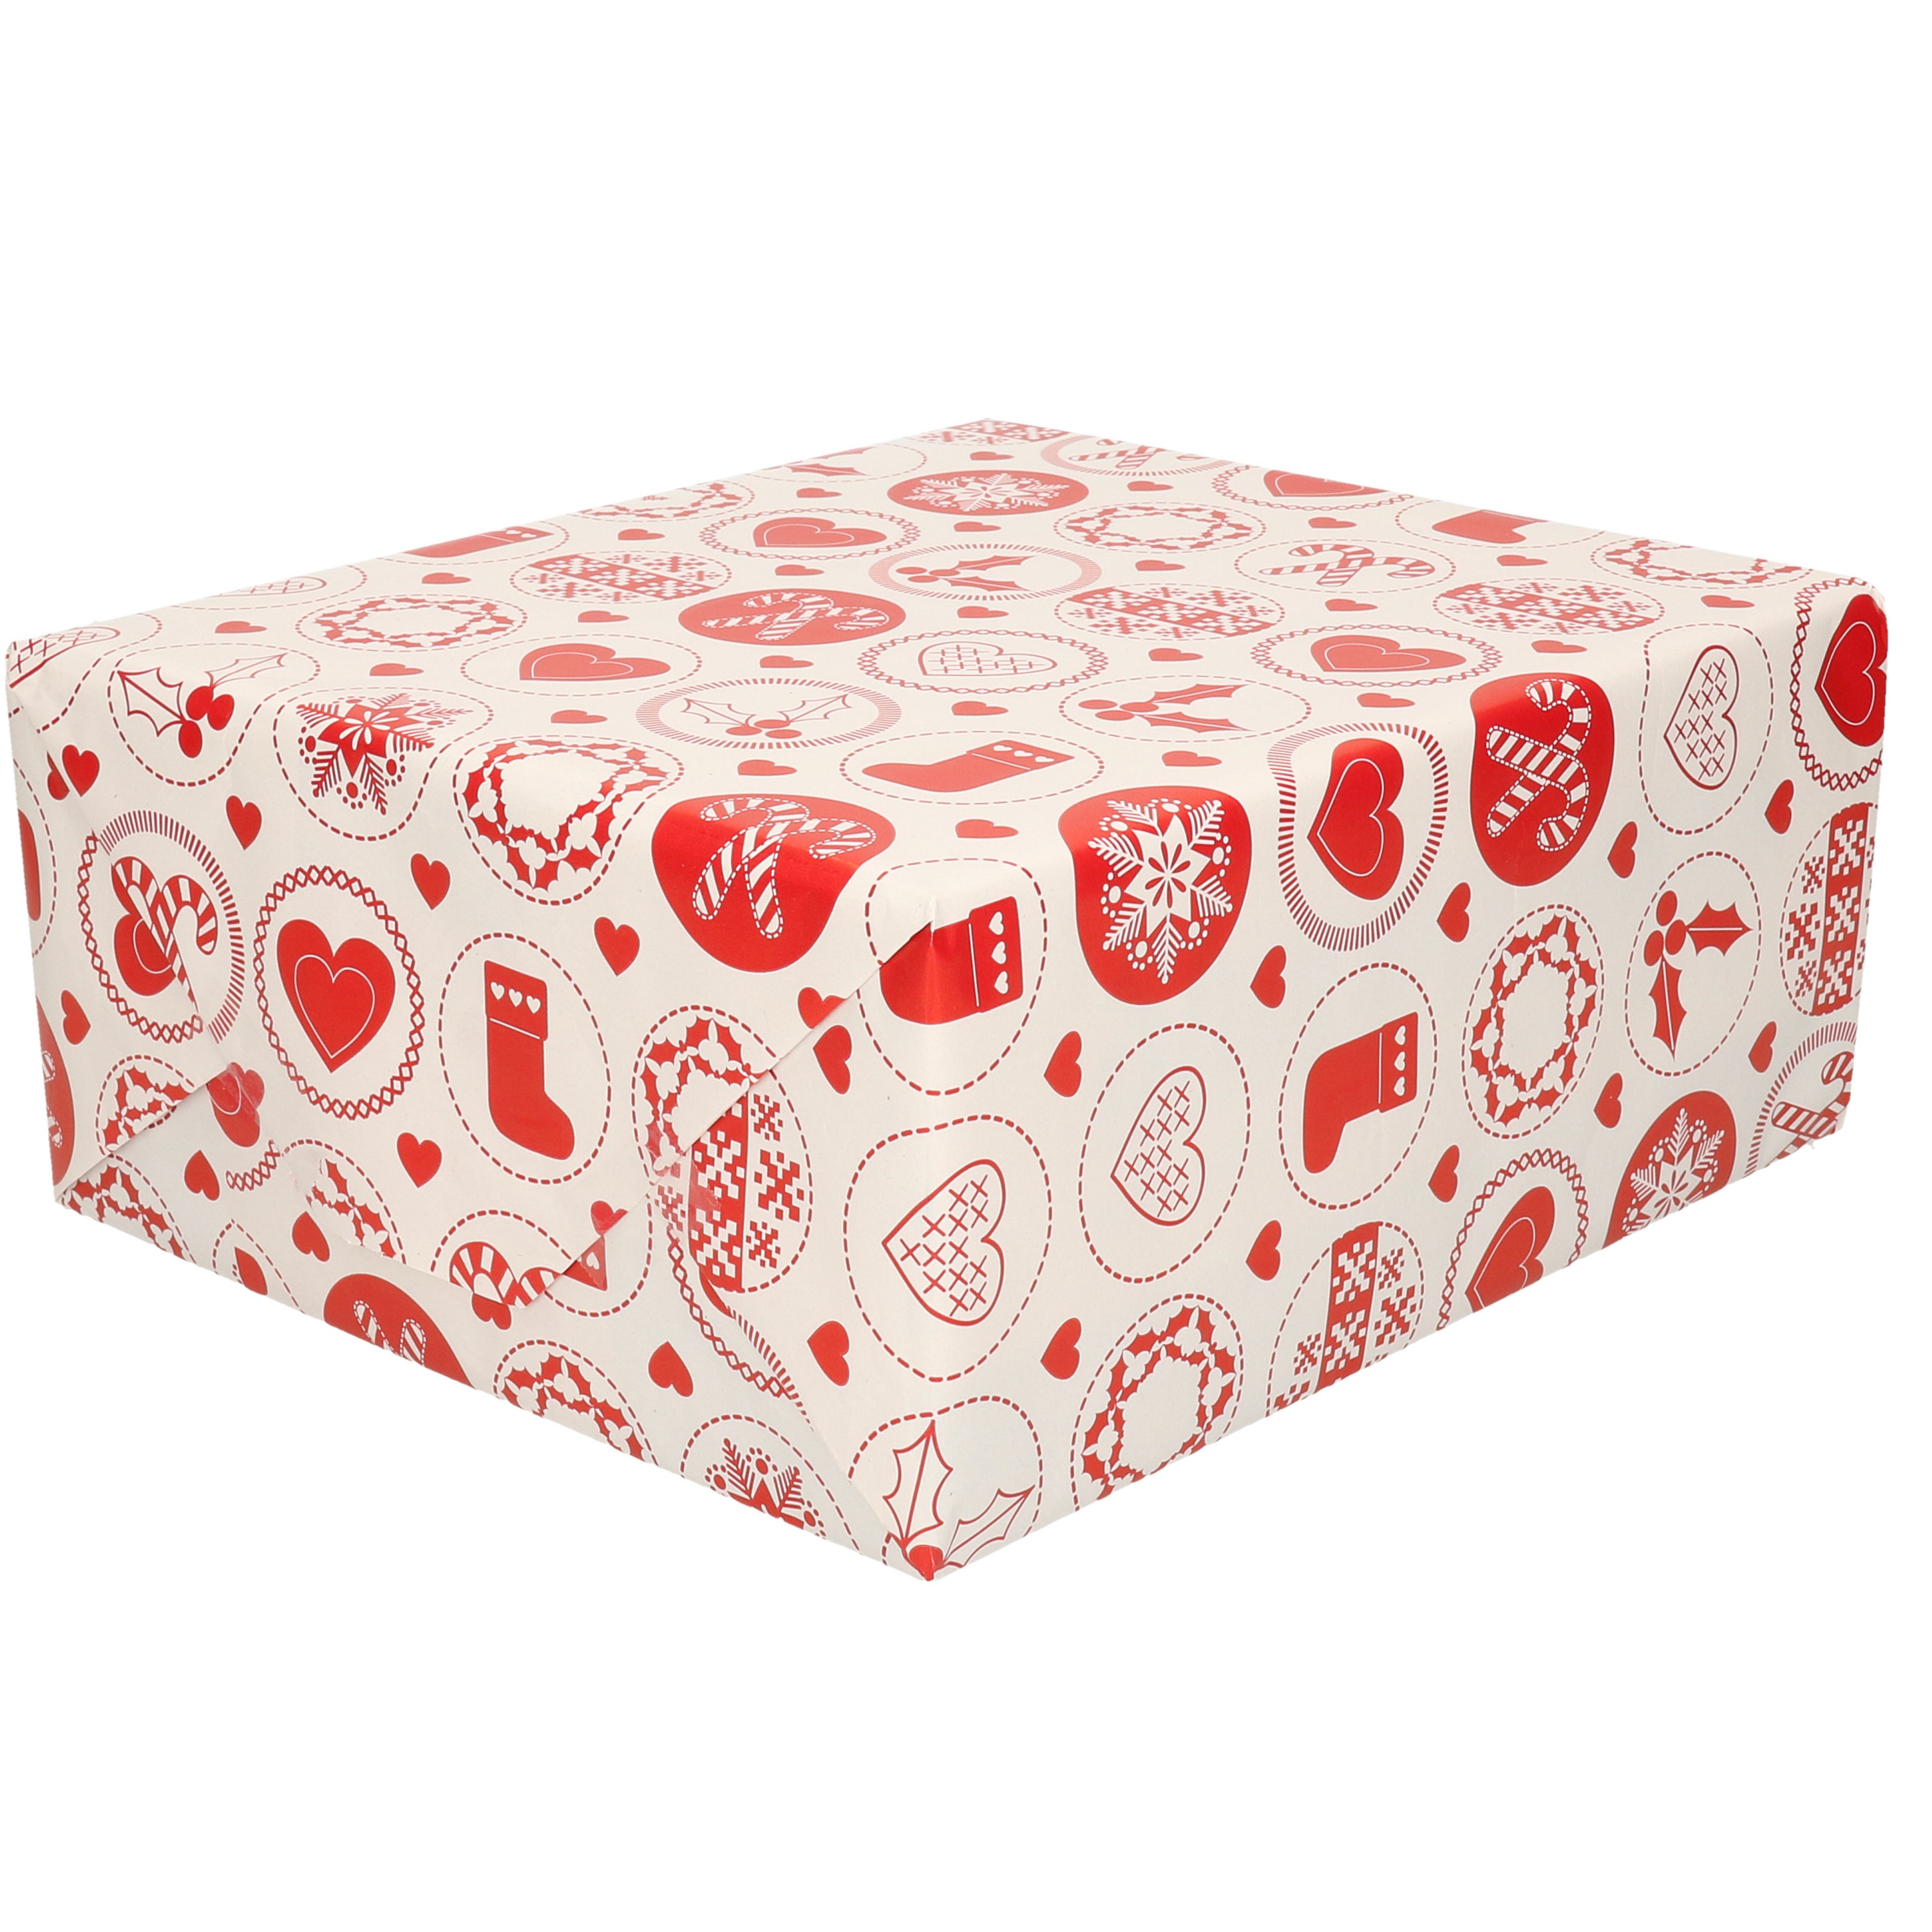 Kerst inpakpapier/cadeaupapier wit met rood 200 x 70 cm